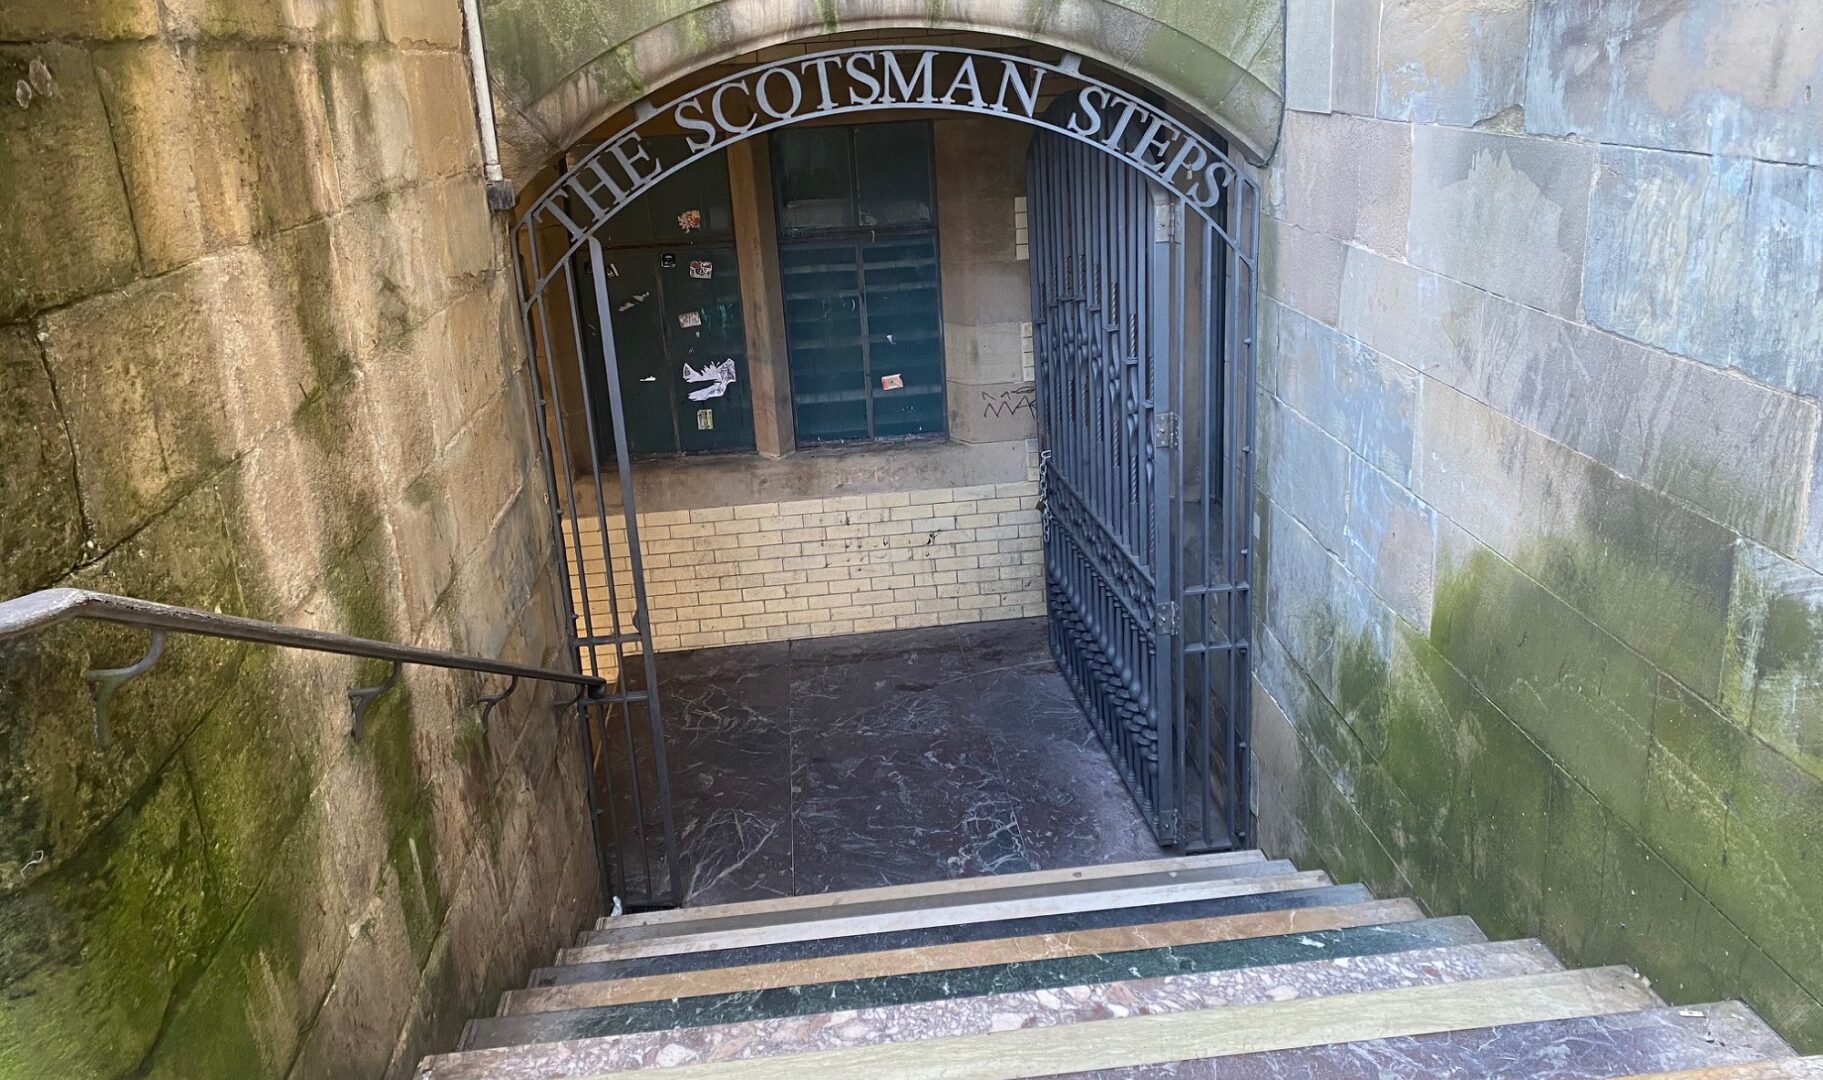 Scotsman Steps